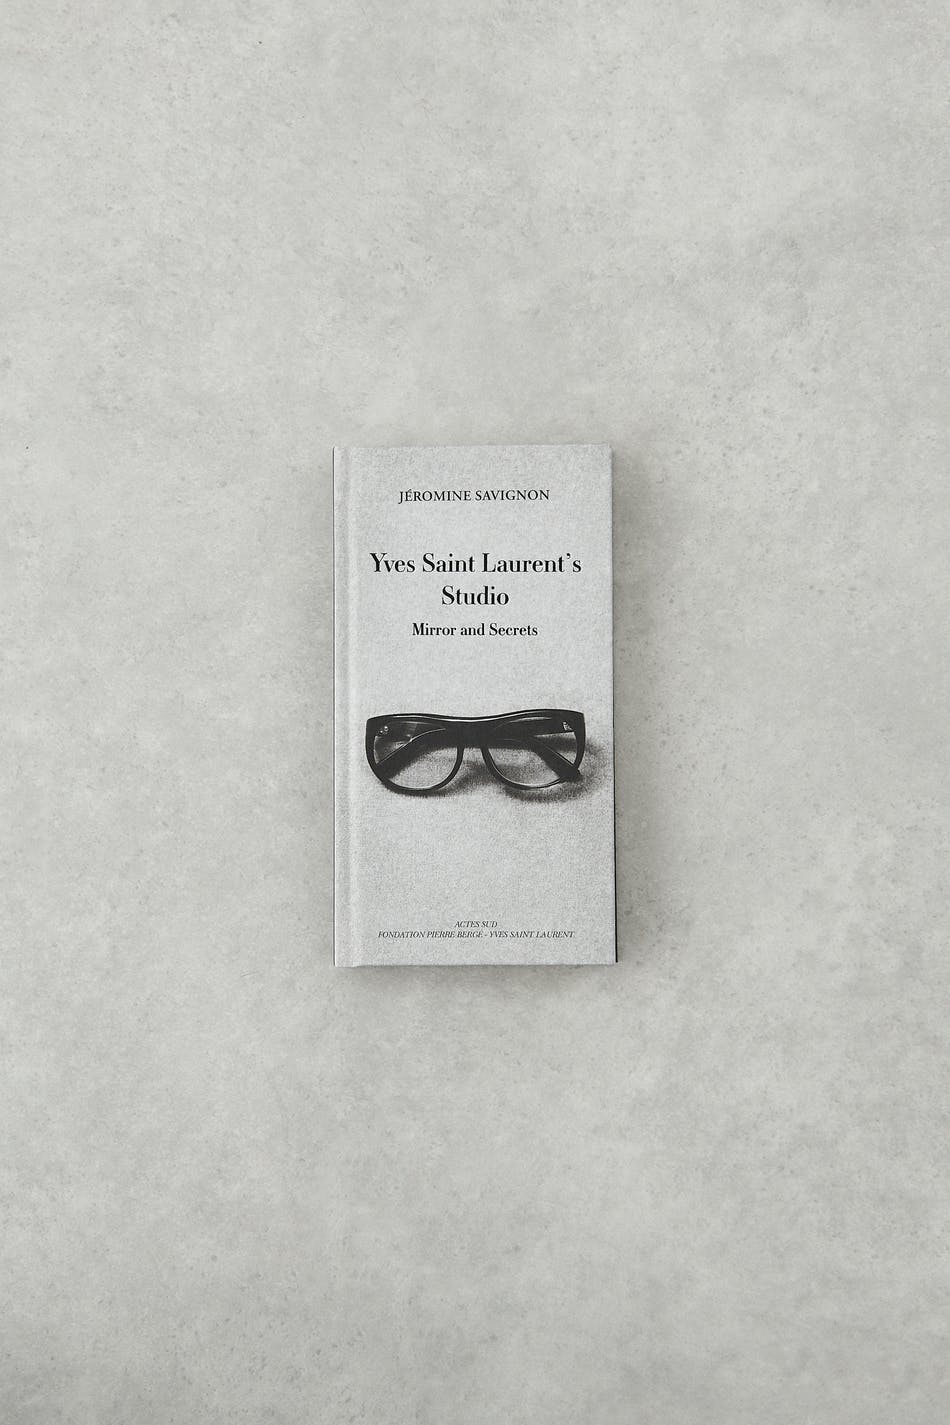 New mags Yves Saint Laurent´s Studio book